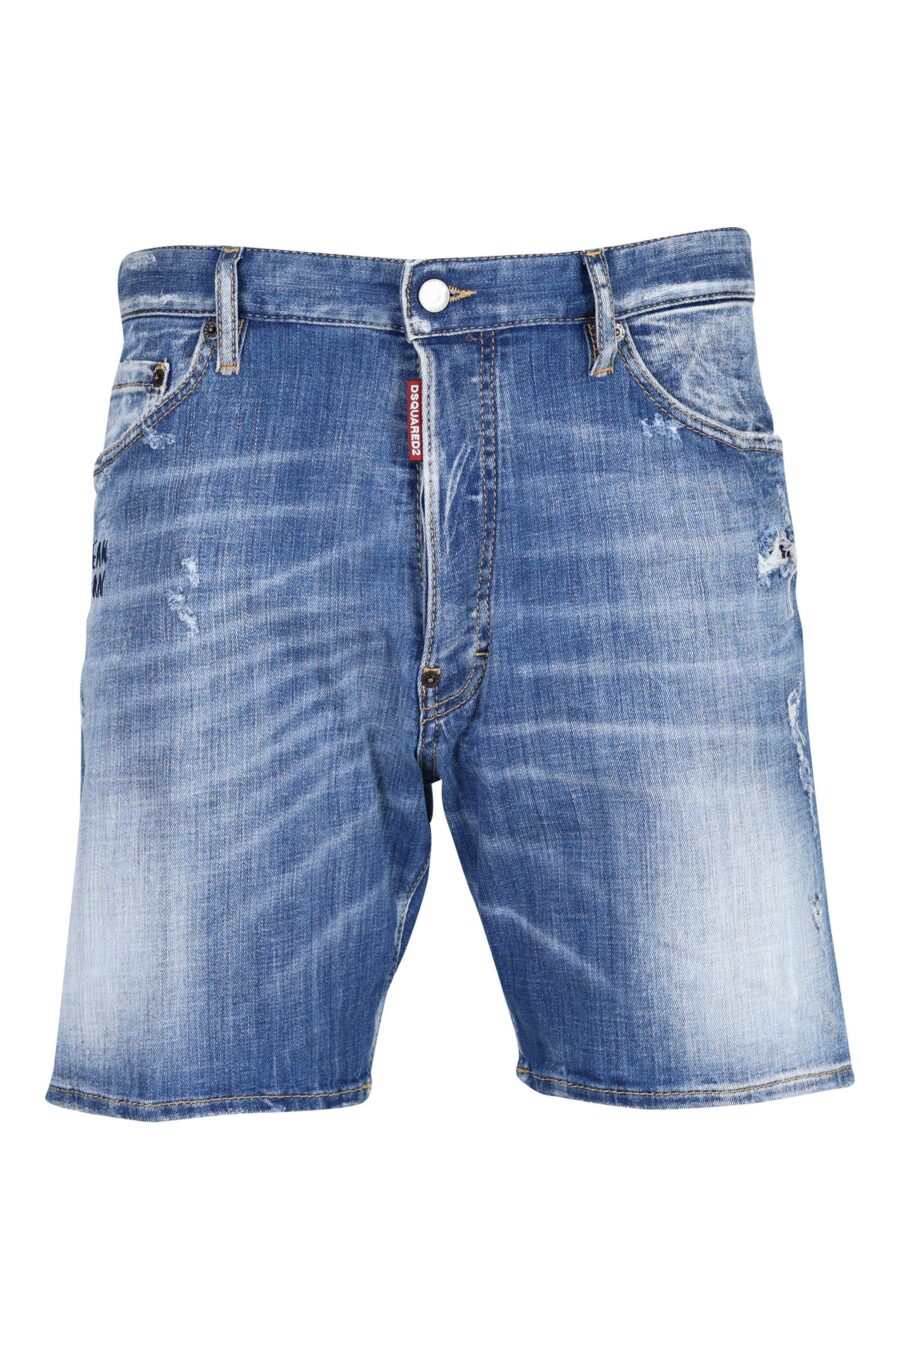 Dsquared2 - Pantalón vaquero corto azul marine short - BLS Fashion